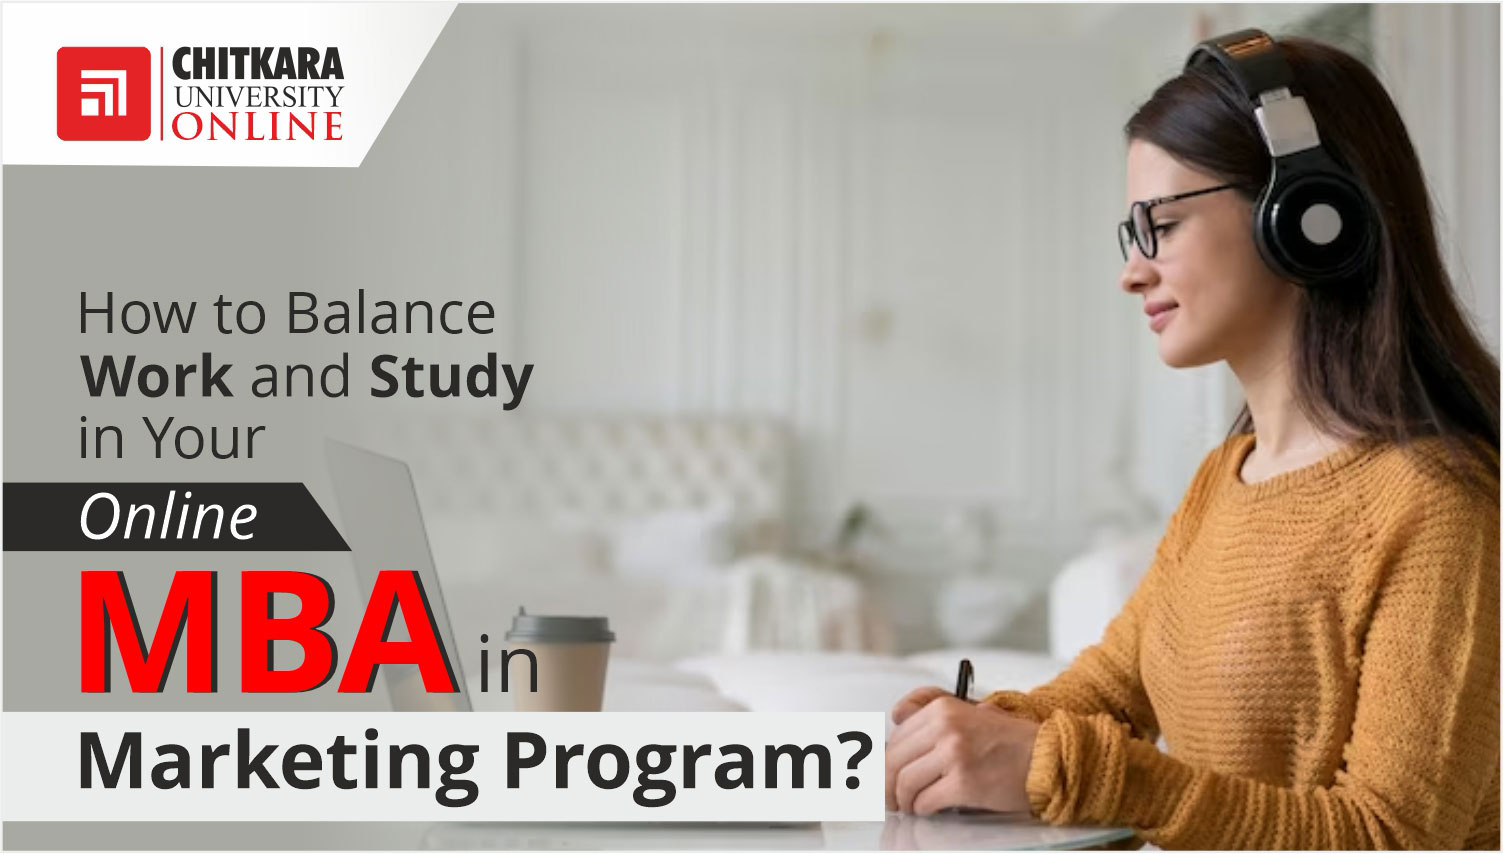 Online MBA in Marketing Program - ChitkaraU Online